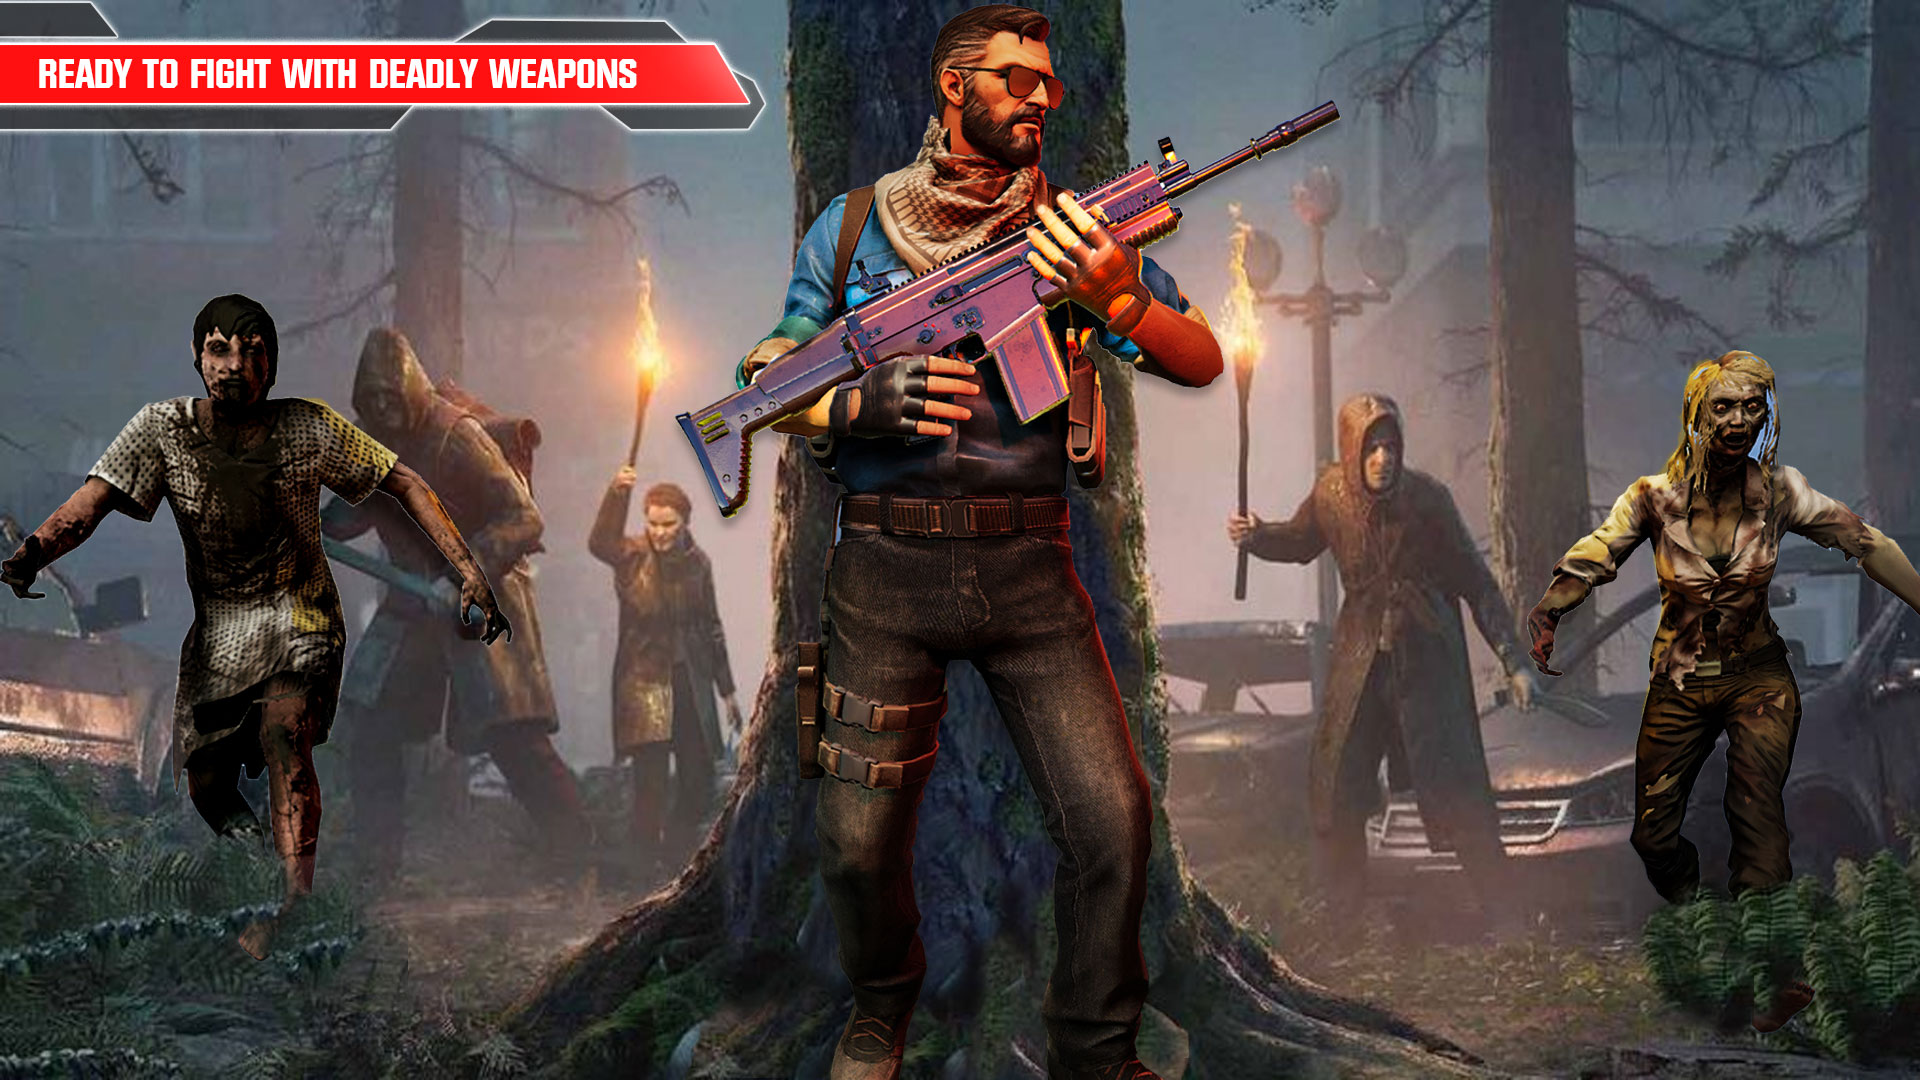 FPS Zombie Shooting Mission – Last Zombie Killer